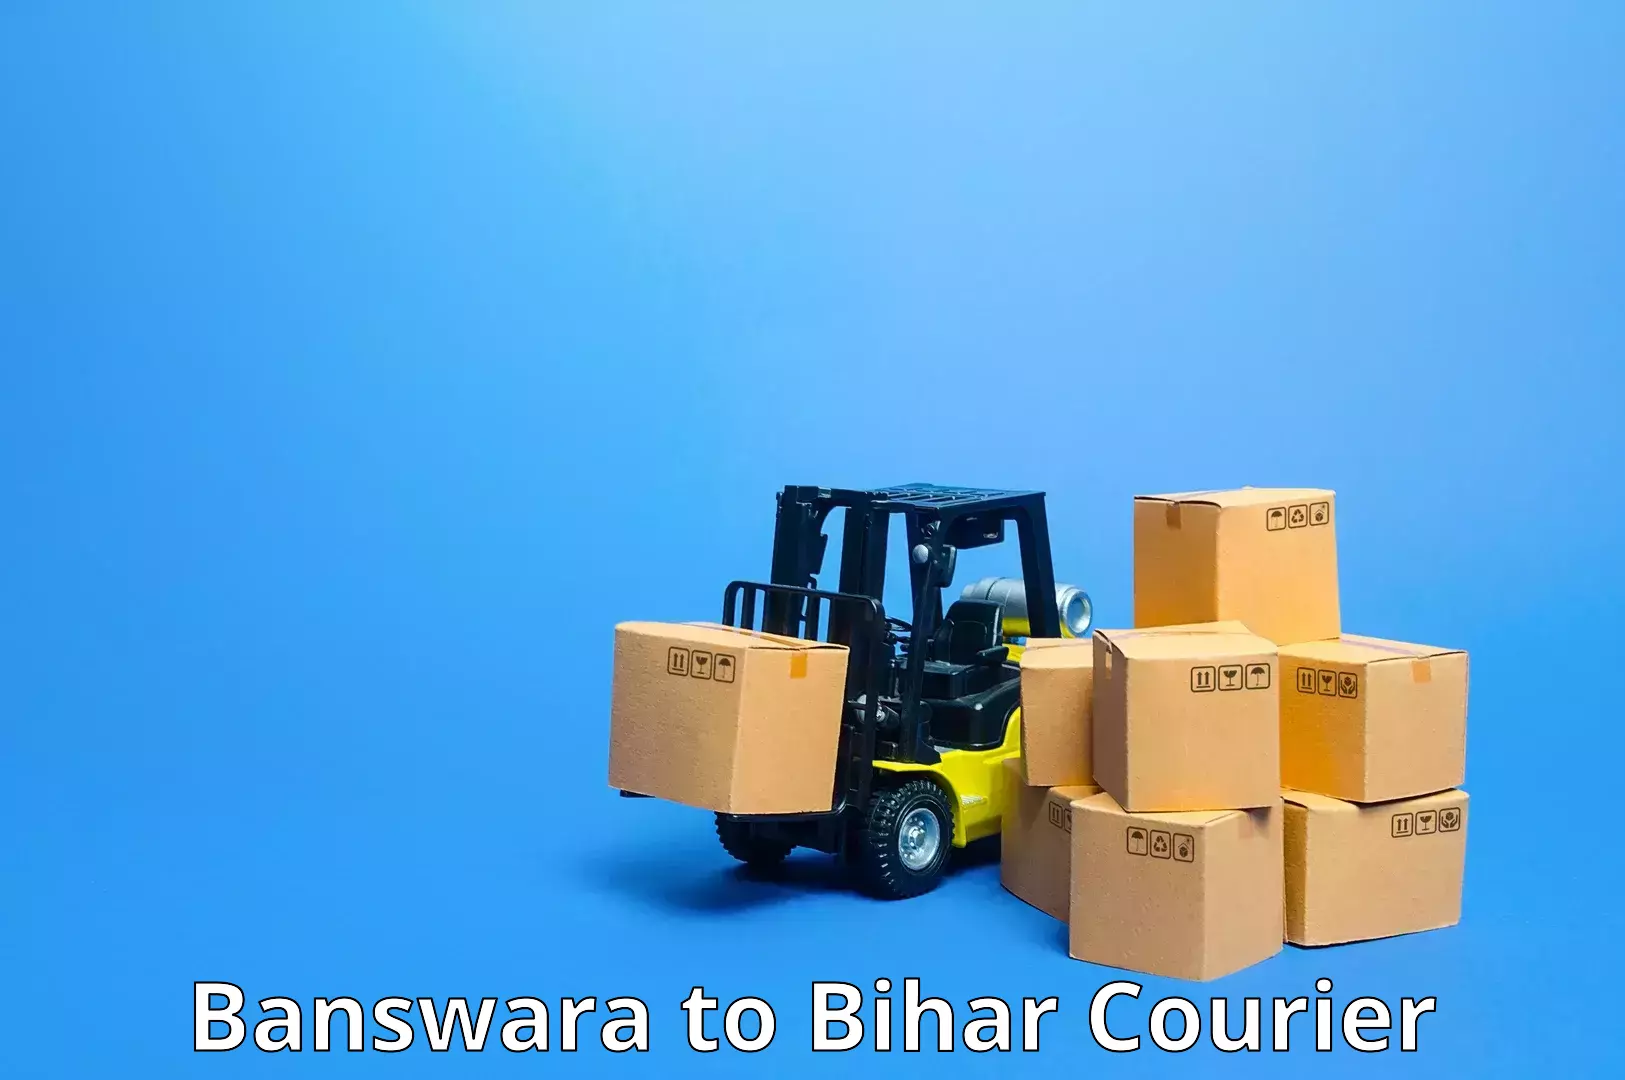 Express delivery capabilities Banswara to Bihar